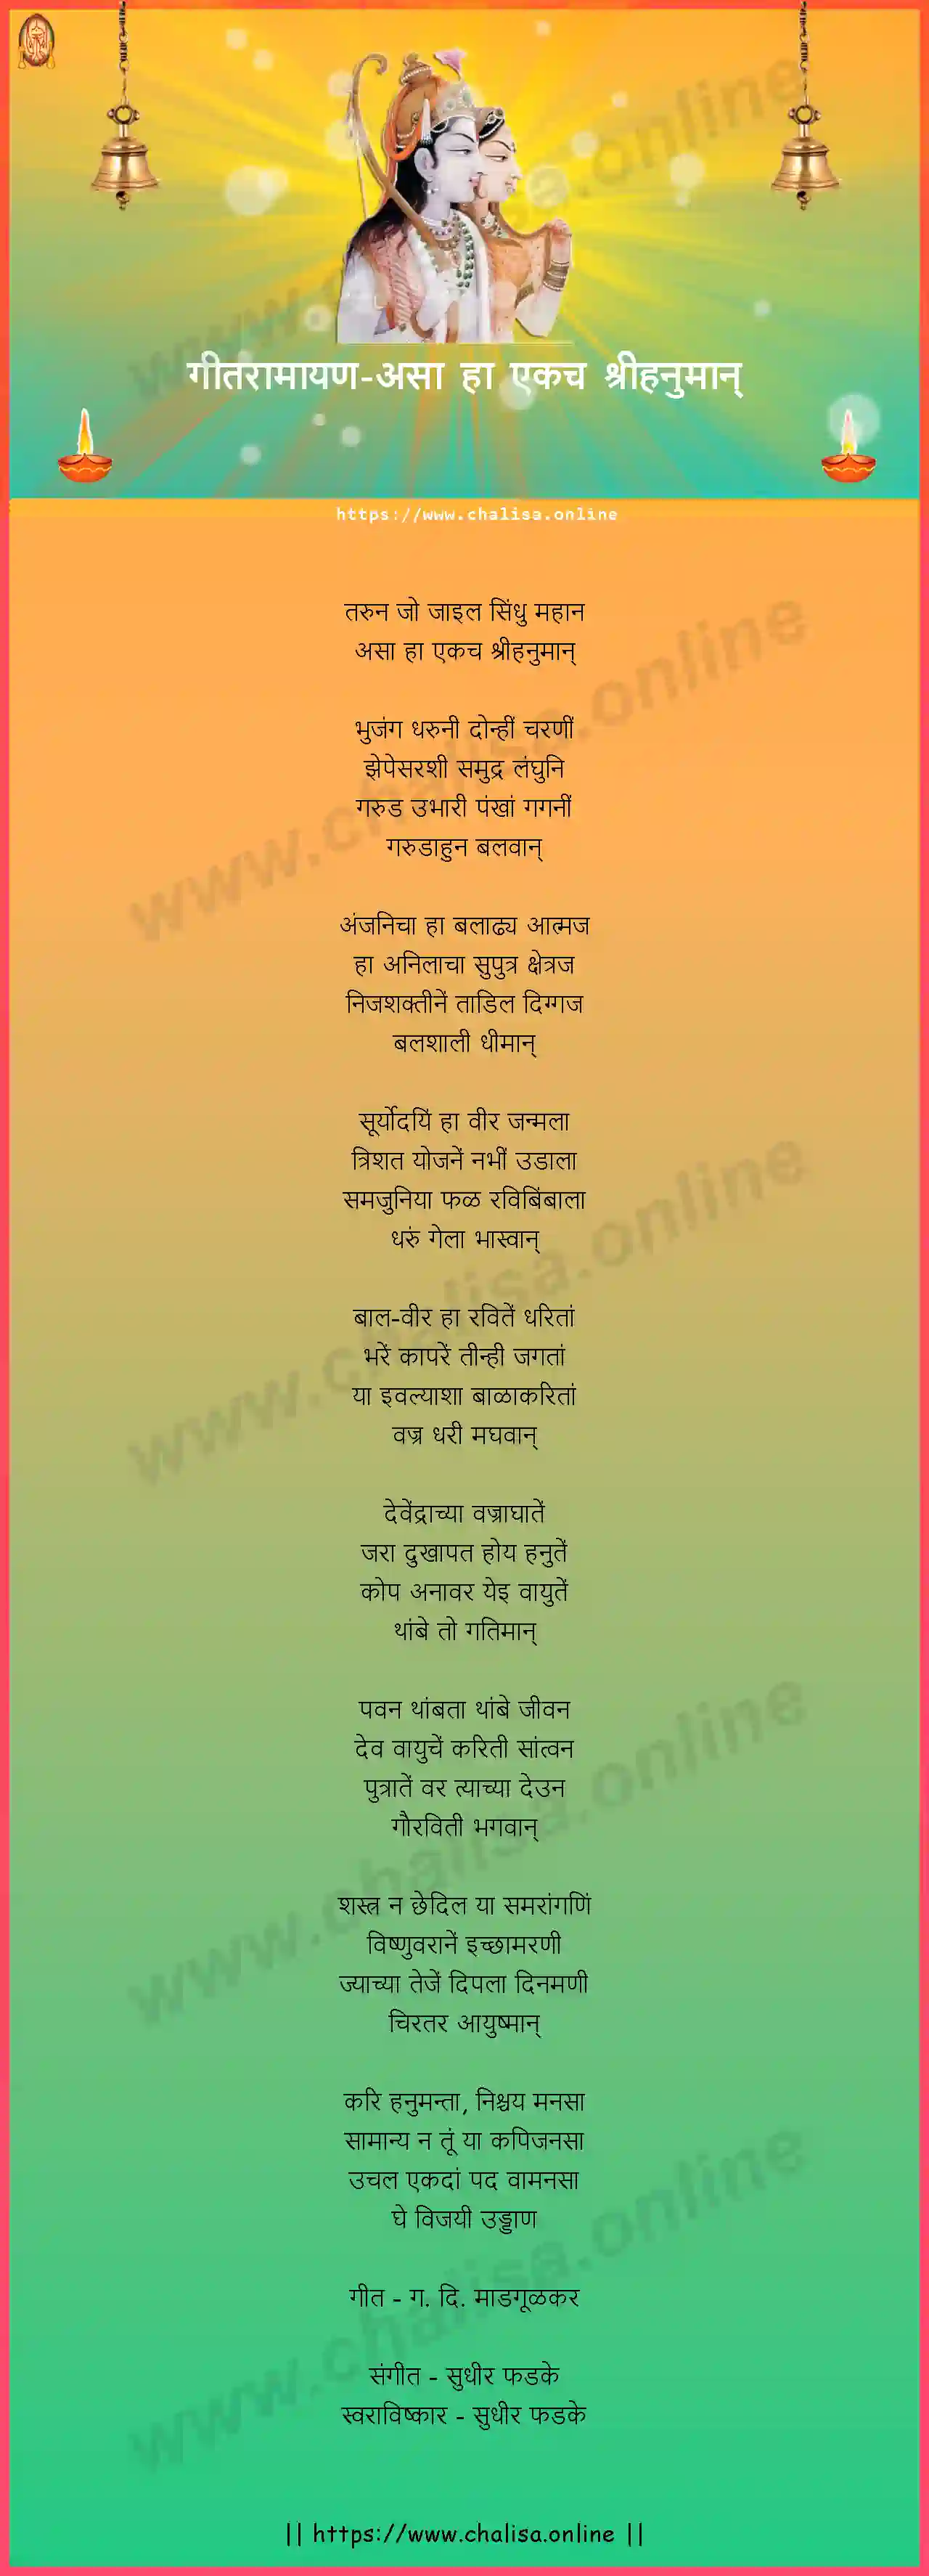 asa-ha-ekach-shri-hanuman-geet-ramayan-marathi-lyrics-download